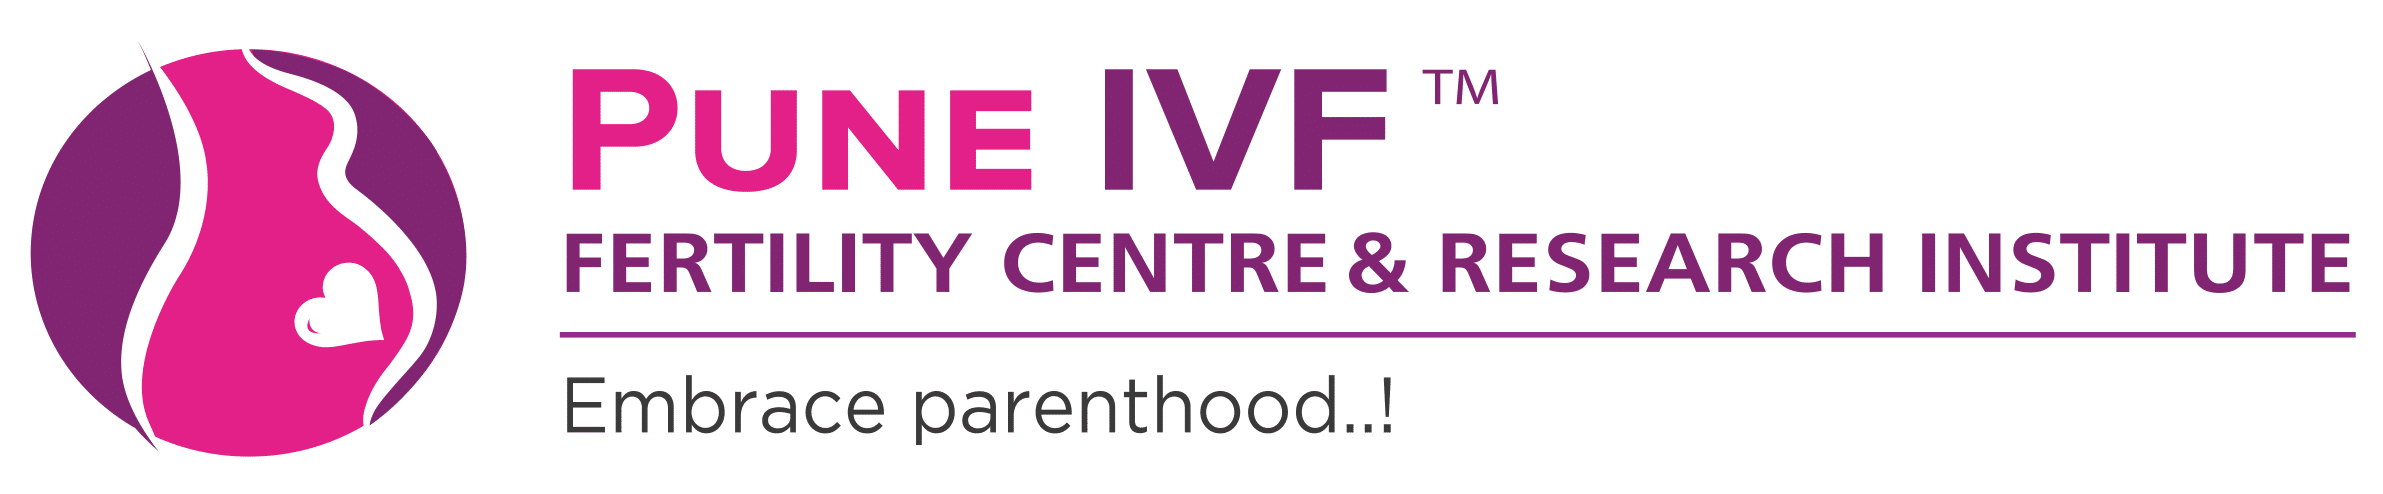 Pune IVF Logo